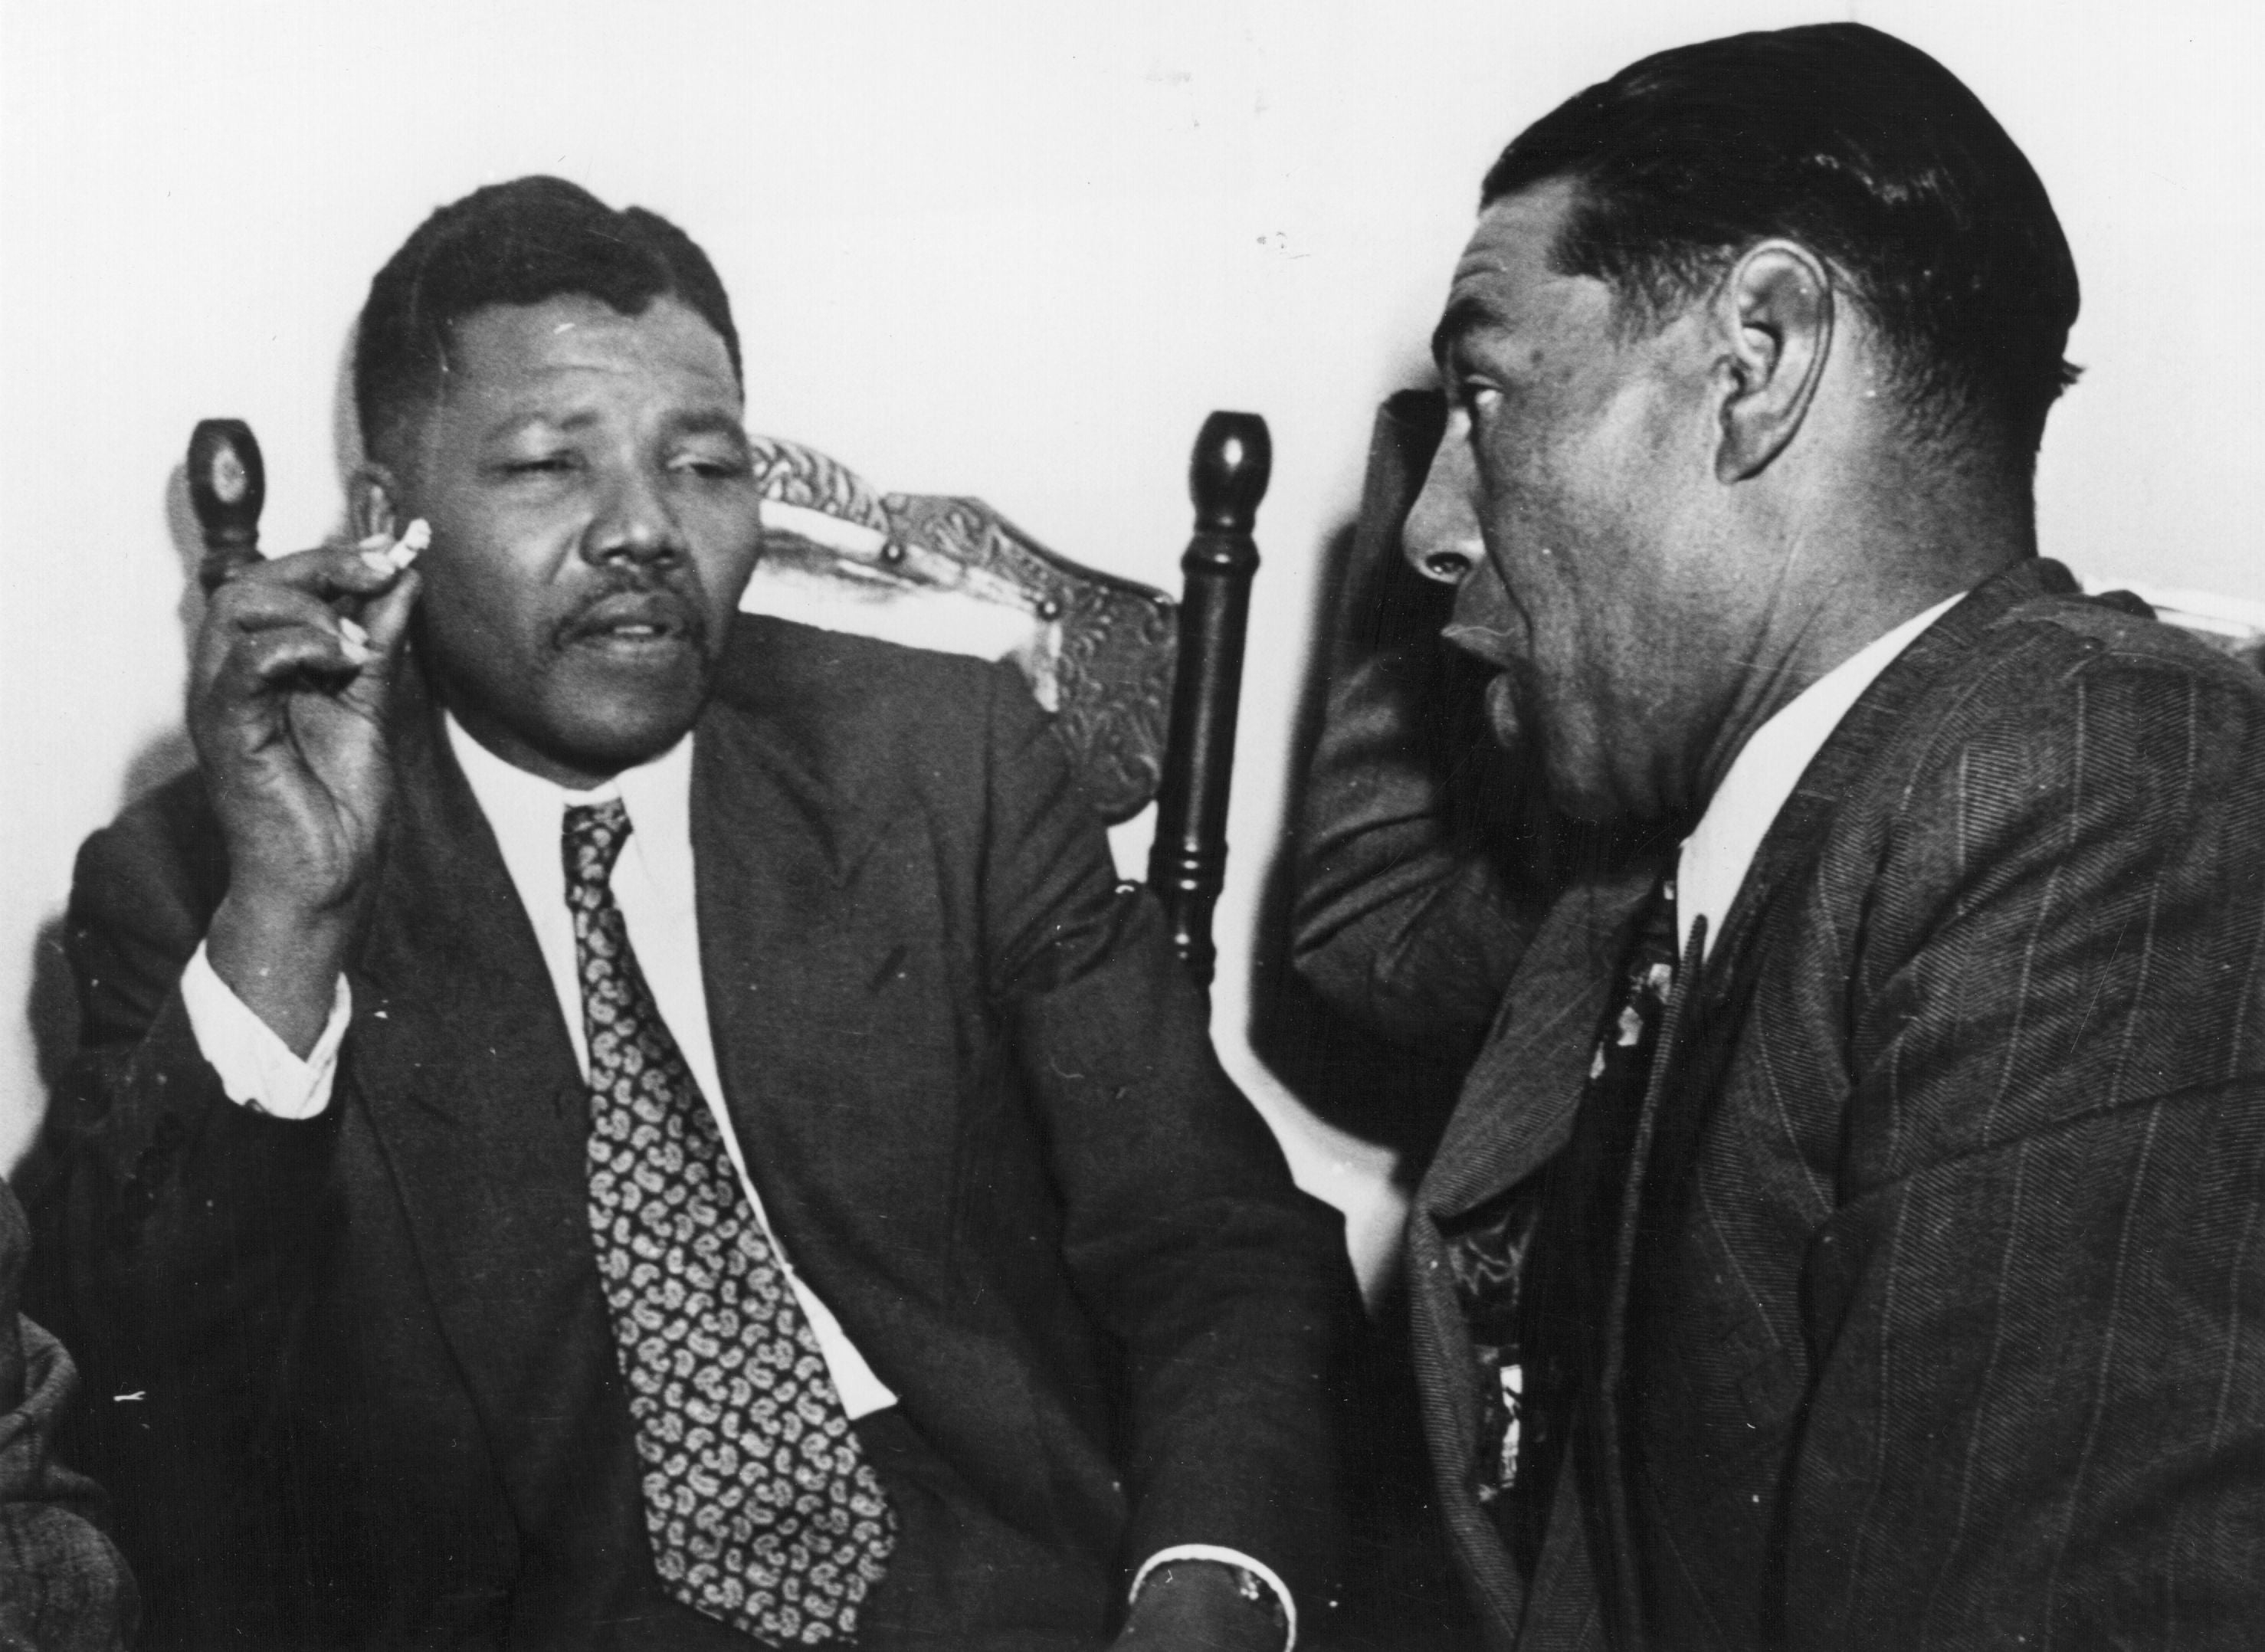 Mandela (left) speaks with a teacher in Cape Town, circa 1950